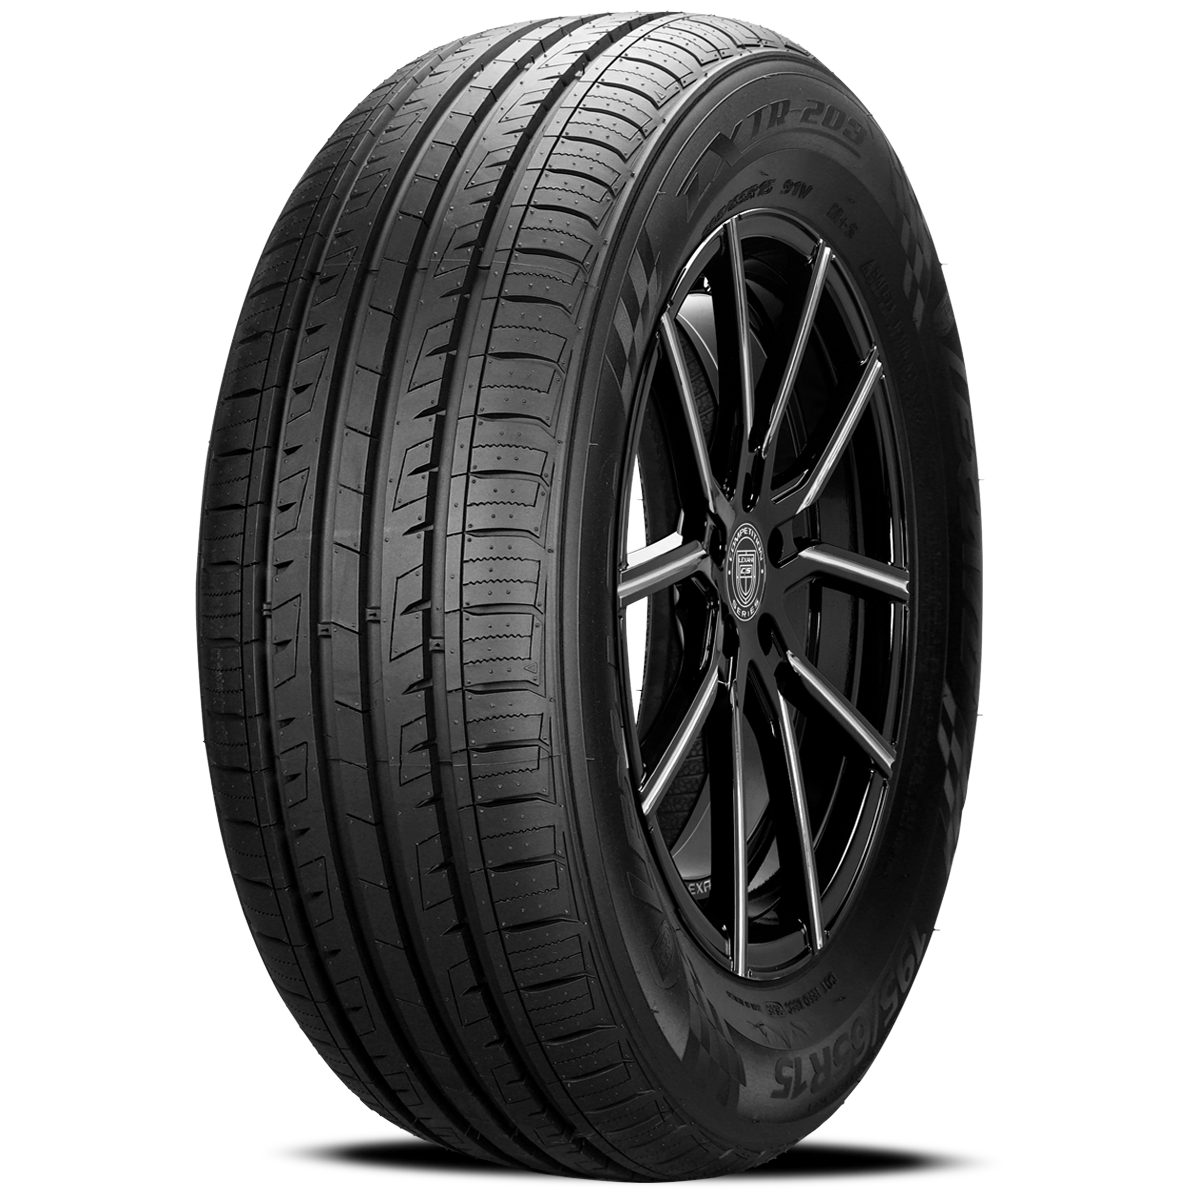 LEXANI LXTR-203 185/55R16 (24X7.3R 16) Tires